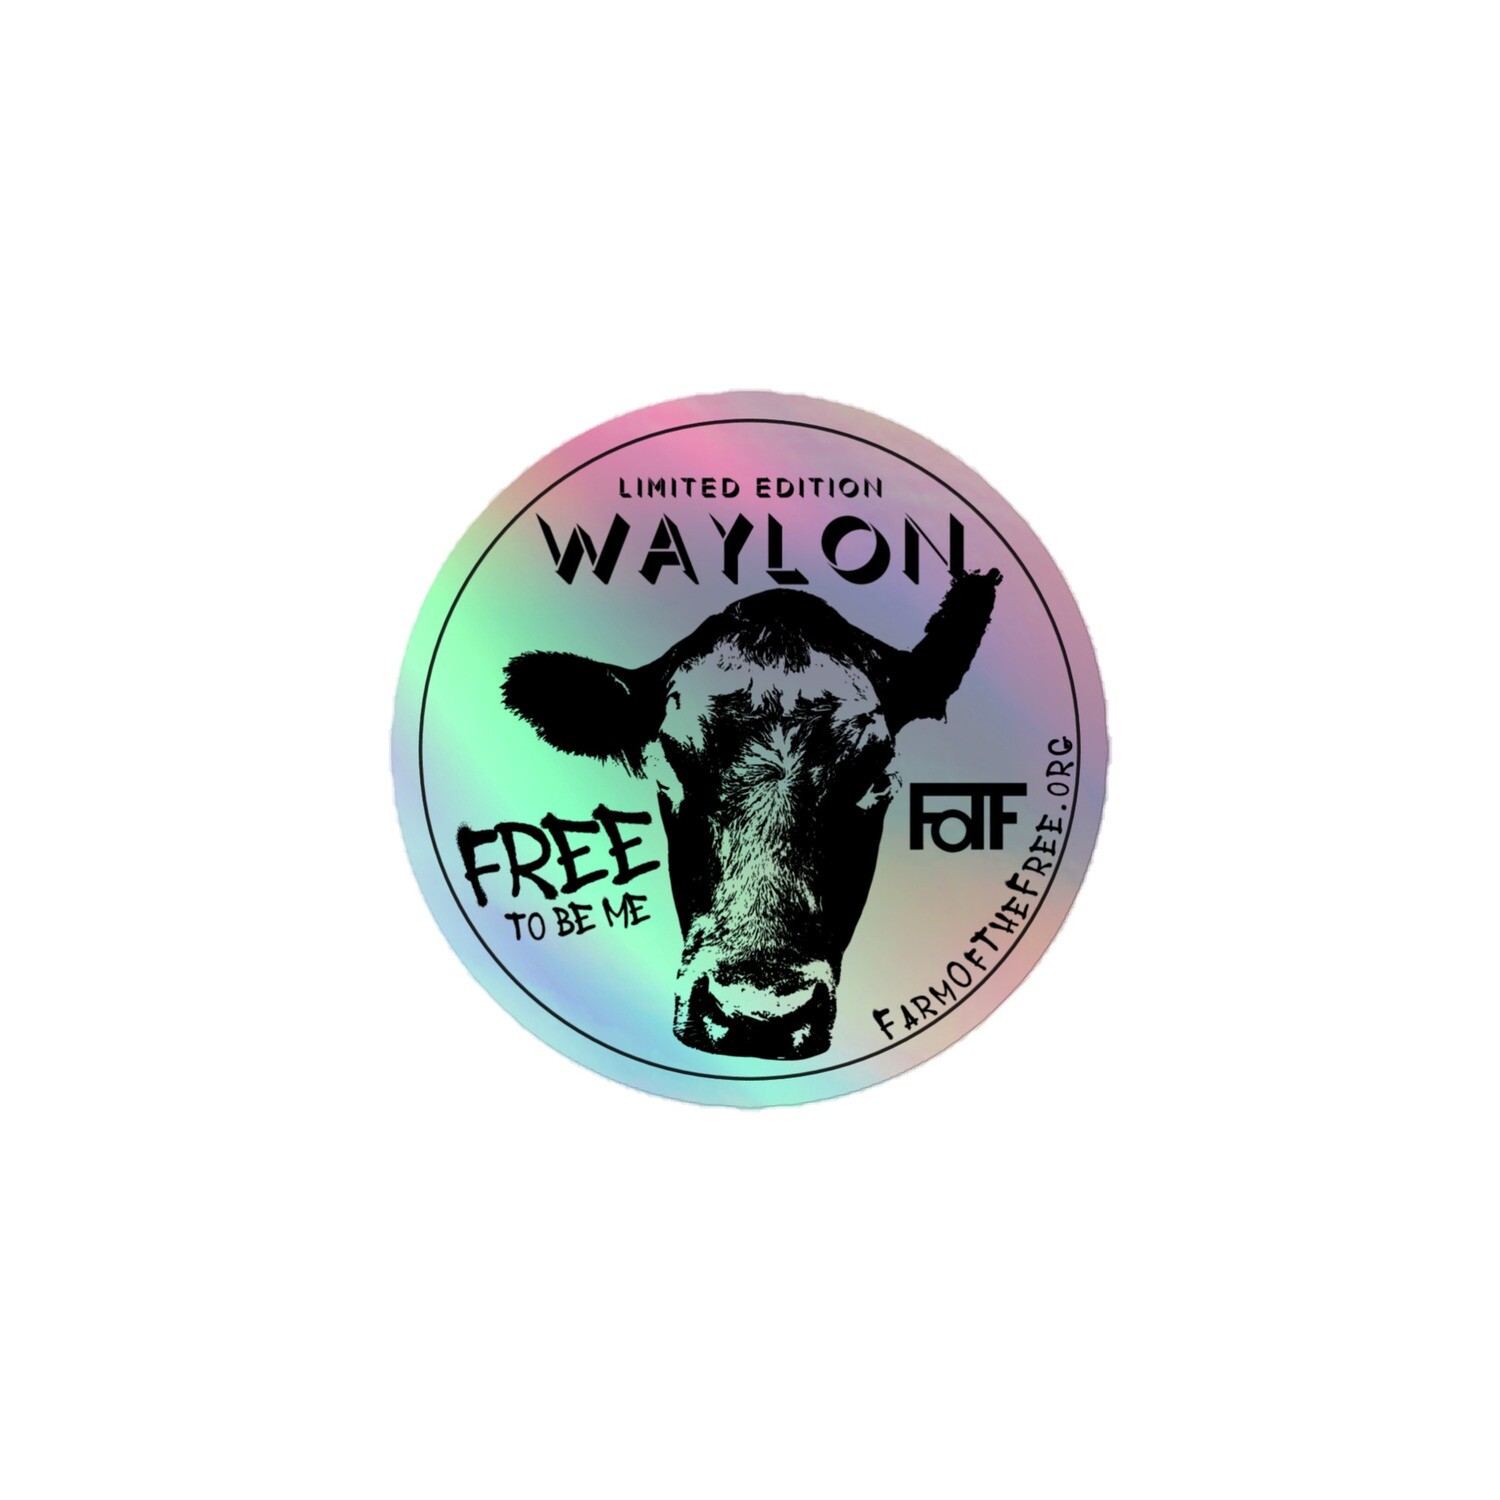 3" Waylon holographic stickers